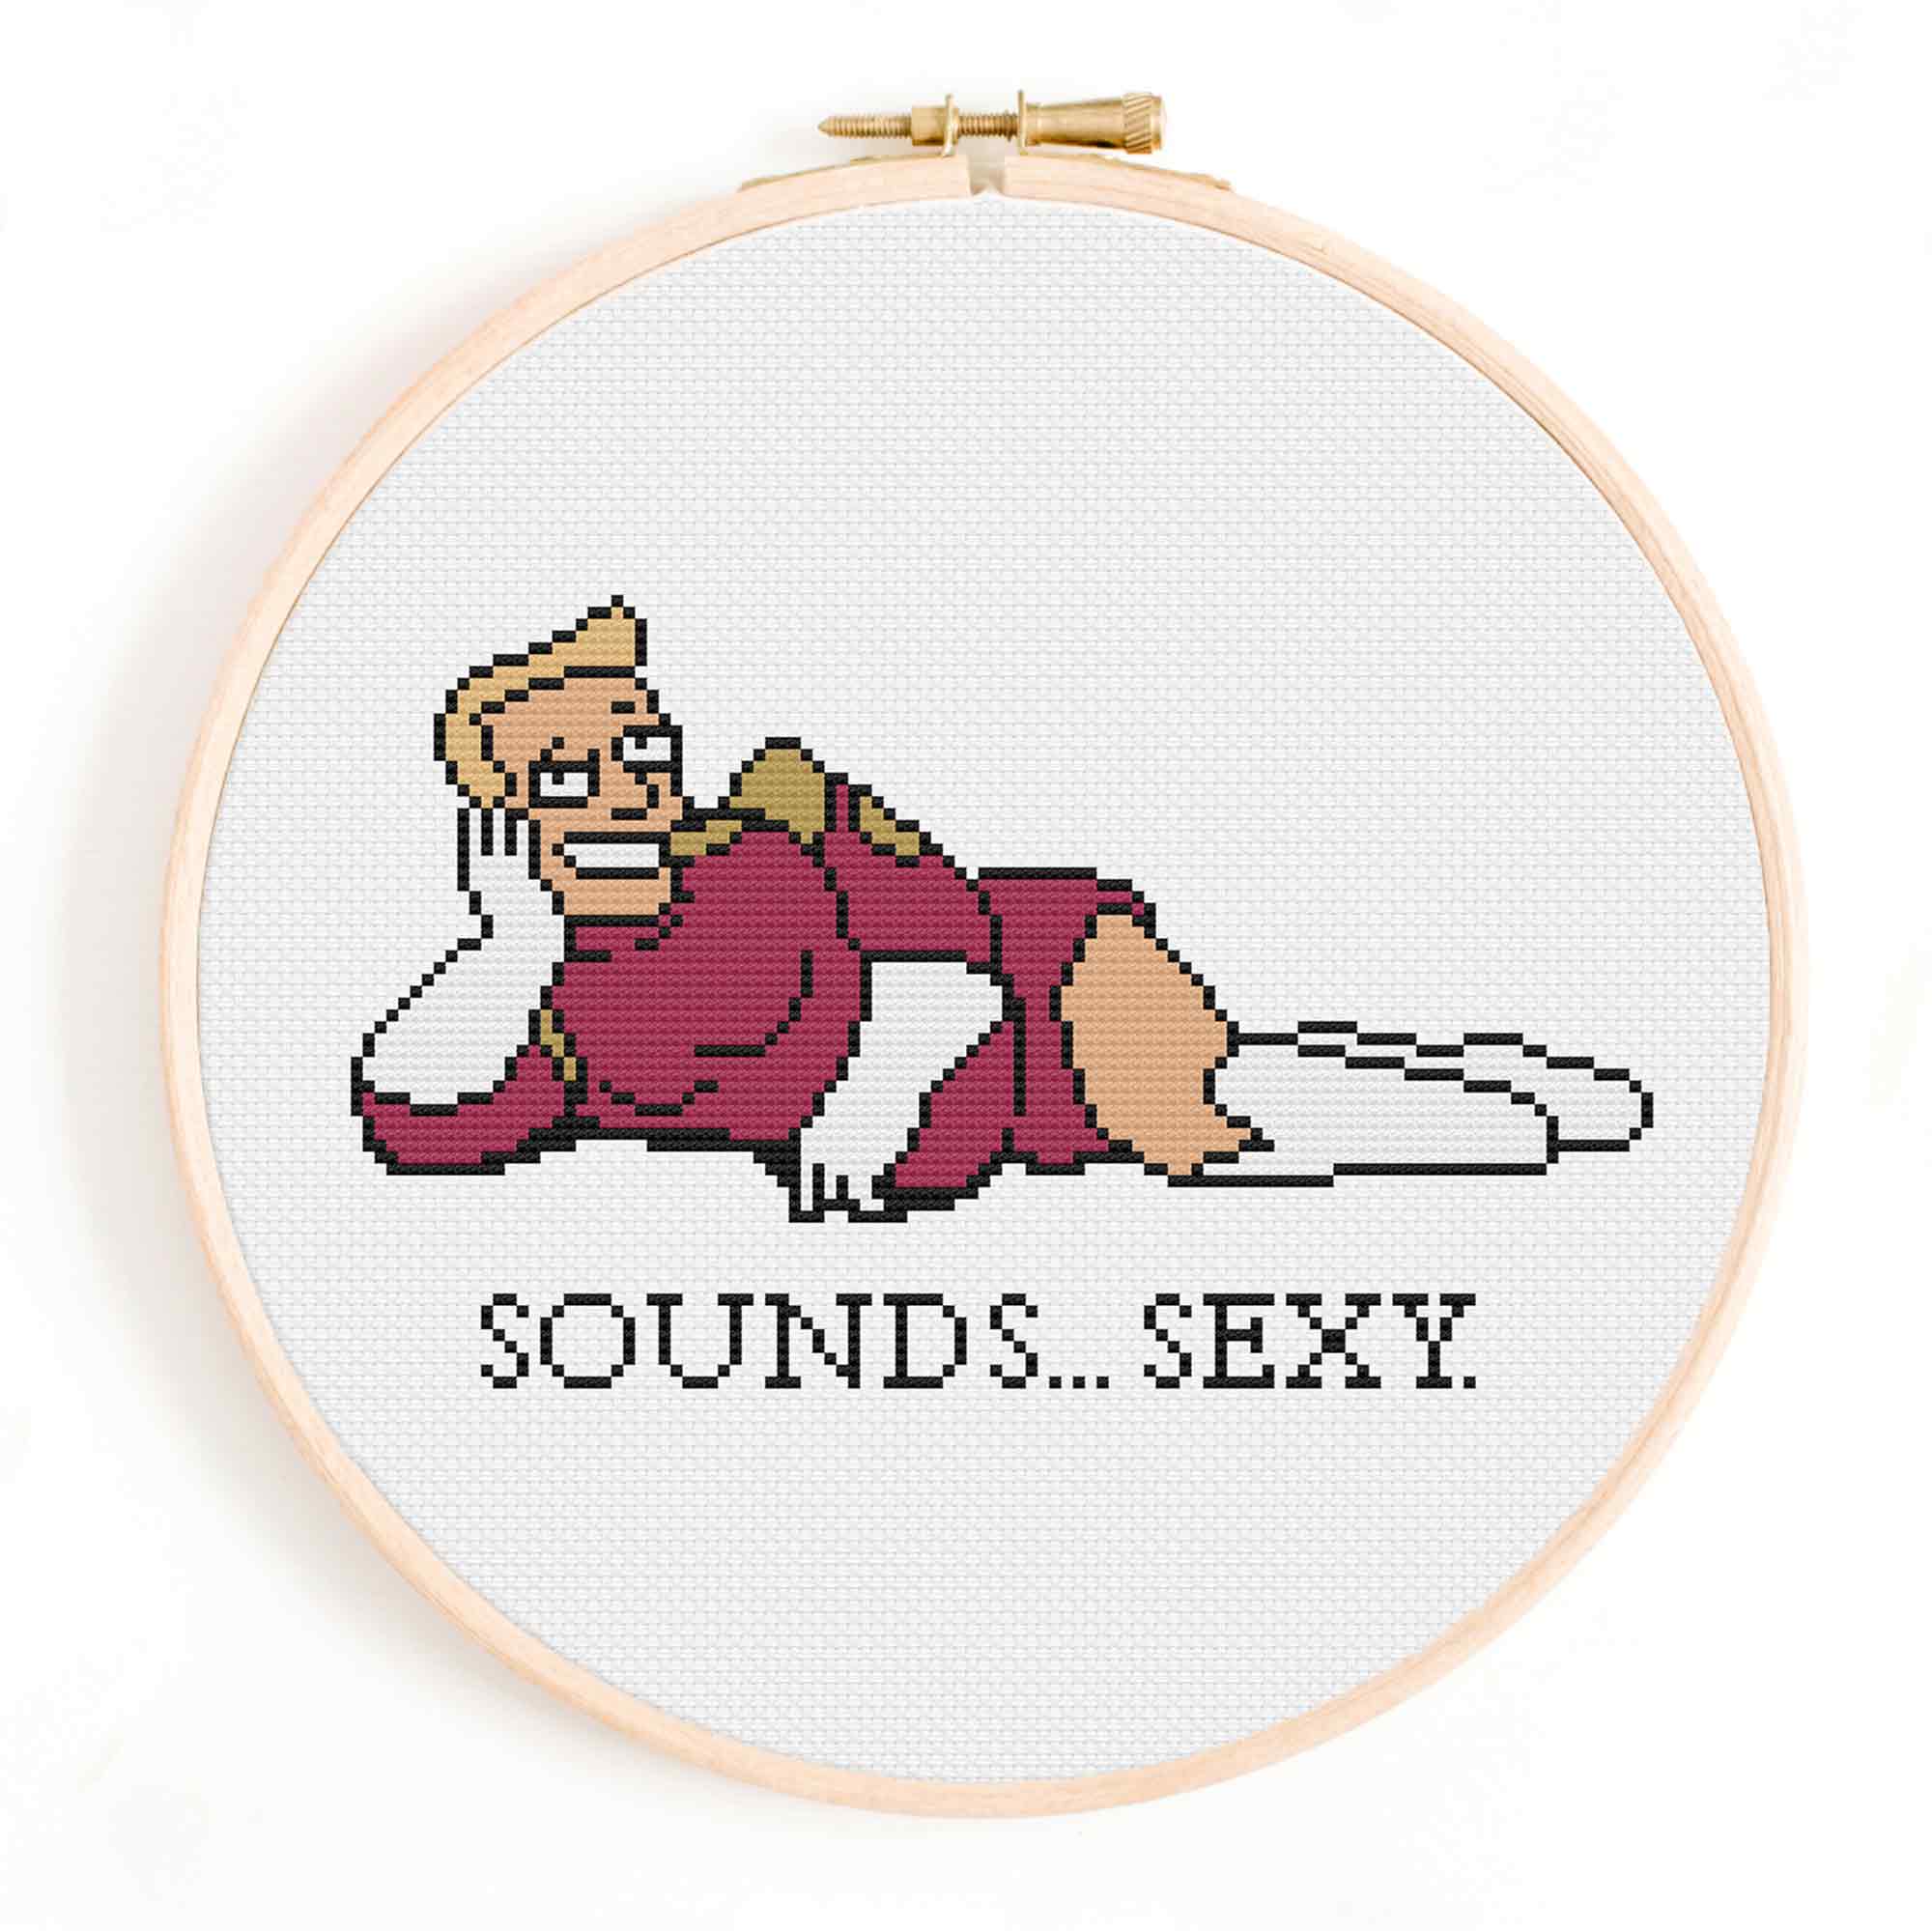 'Sounds... Sexy.' Zapp Brannigan Futurama Cross Stitch Pattern